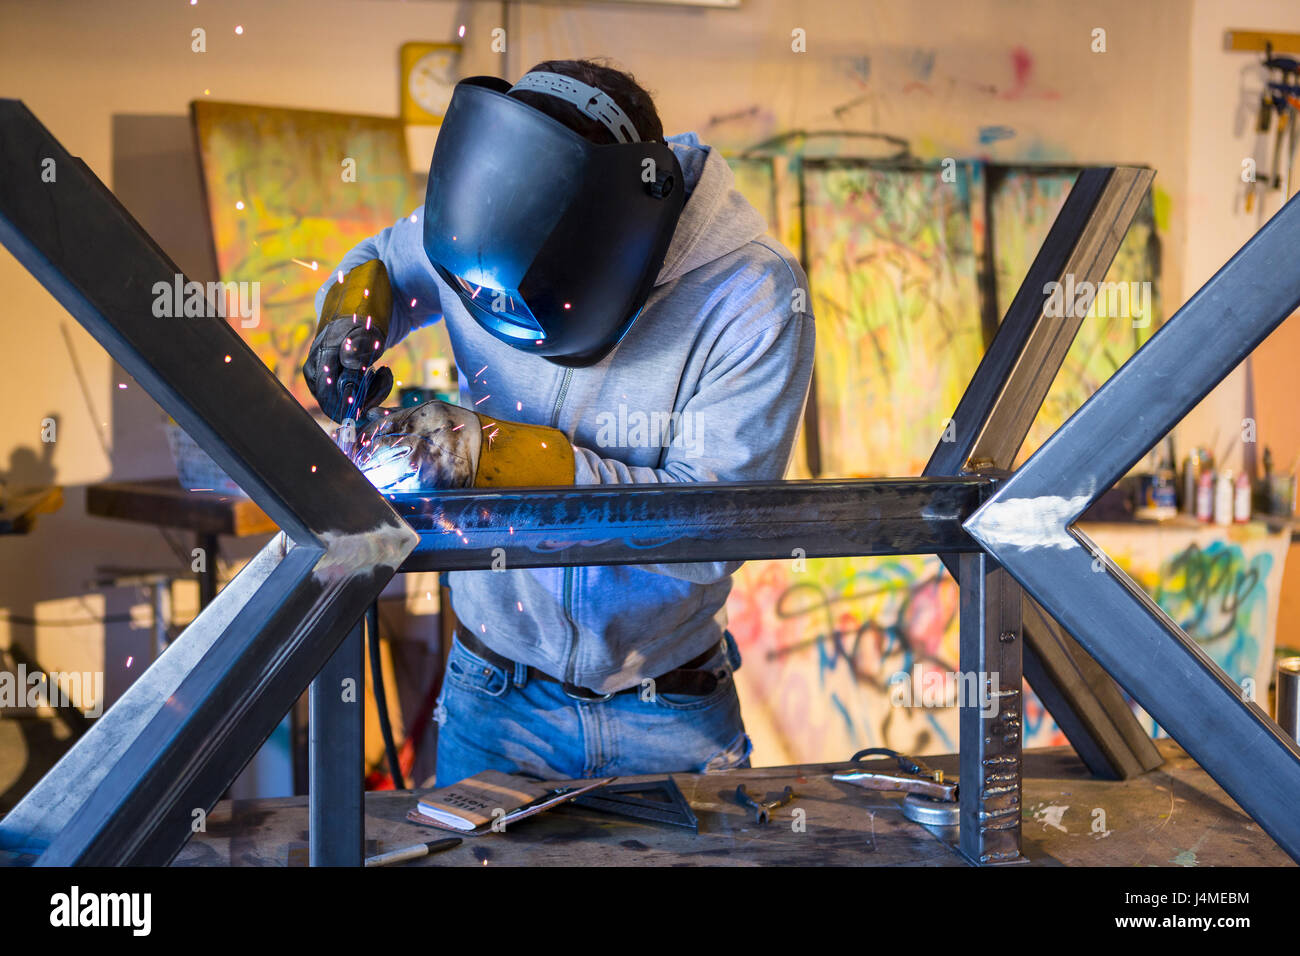 Caucasian man welding metal sculpture Banque D'Images